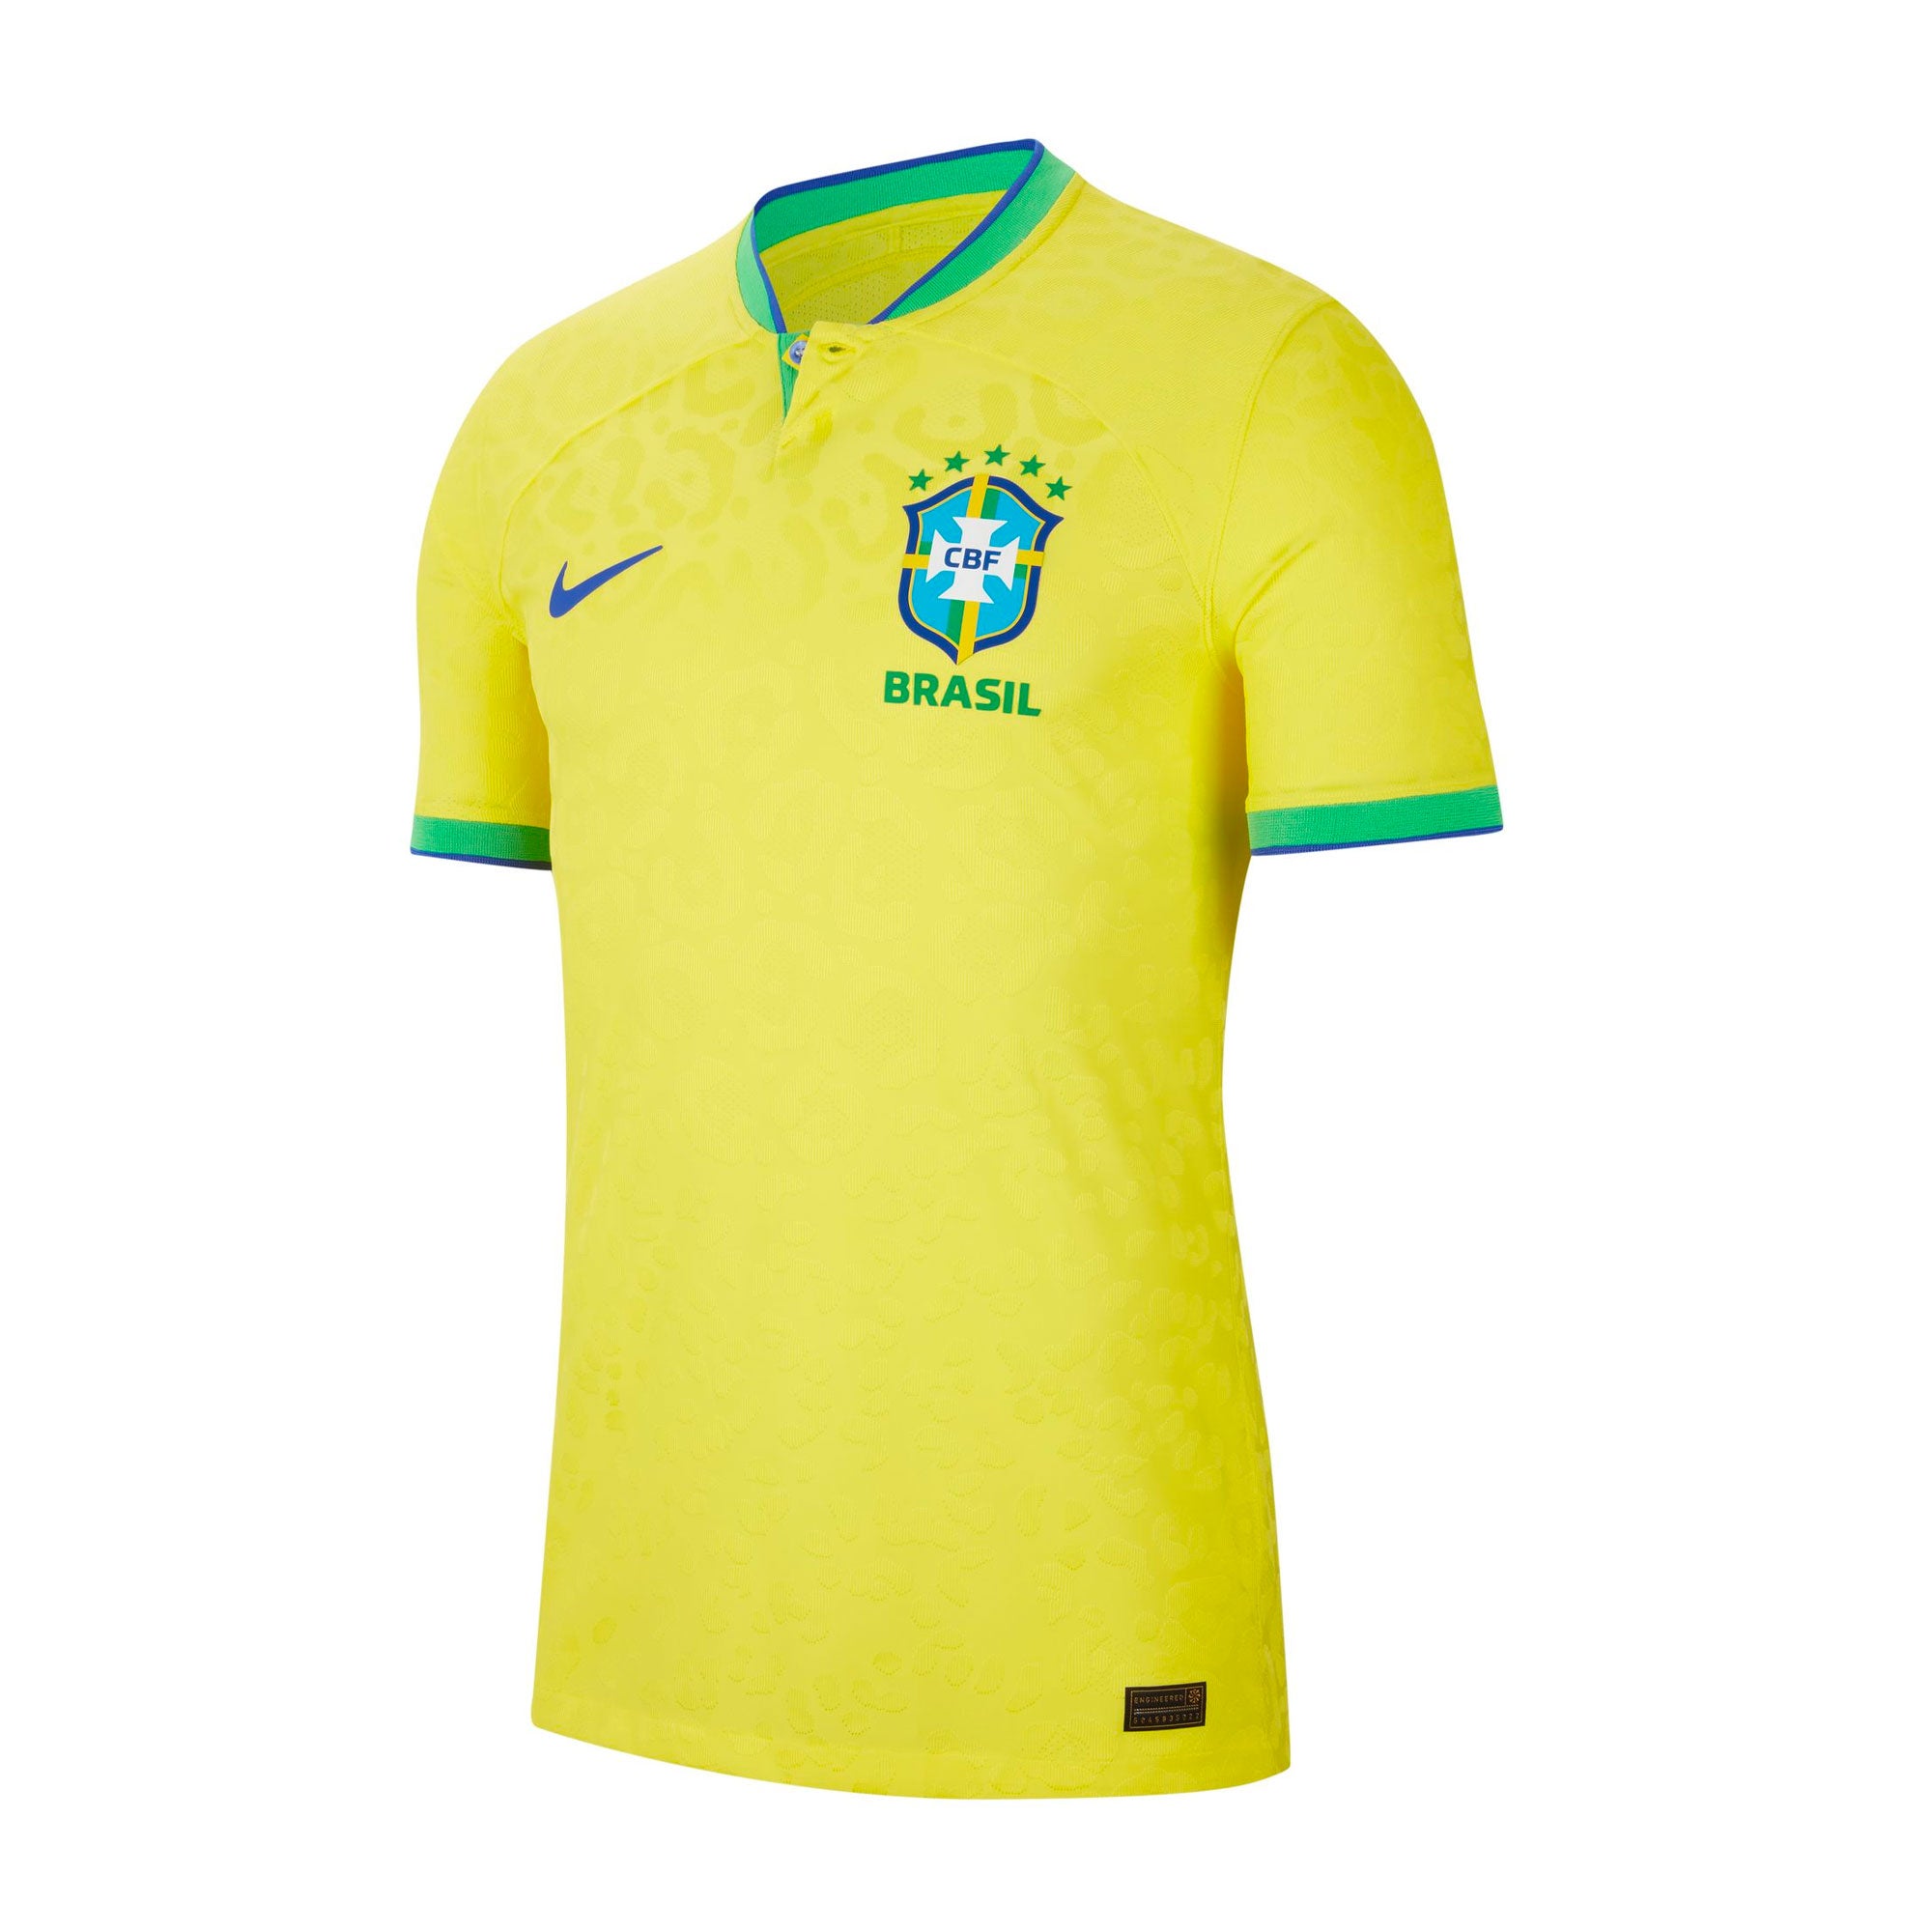 Authentic Nike Brazil Tee